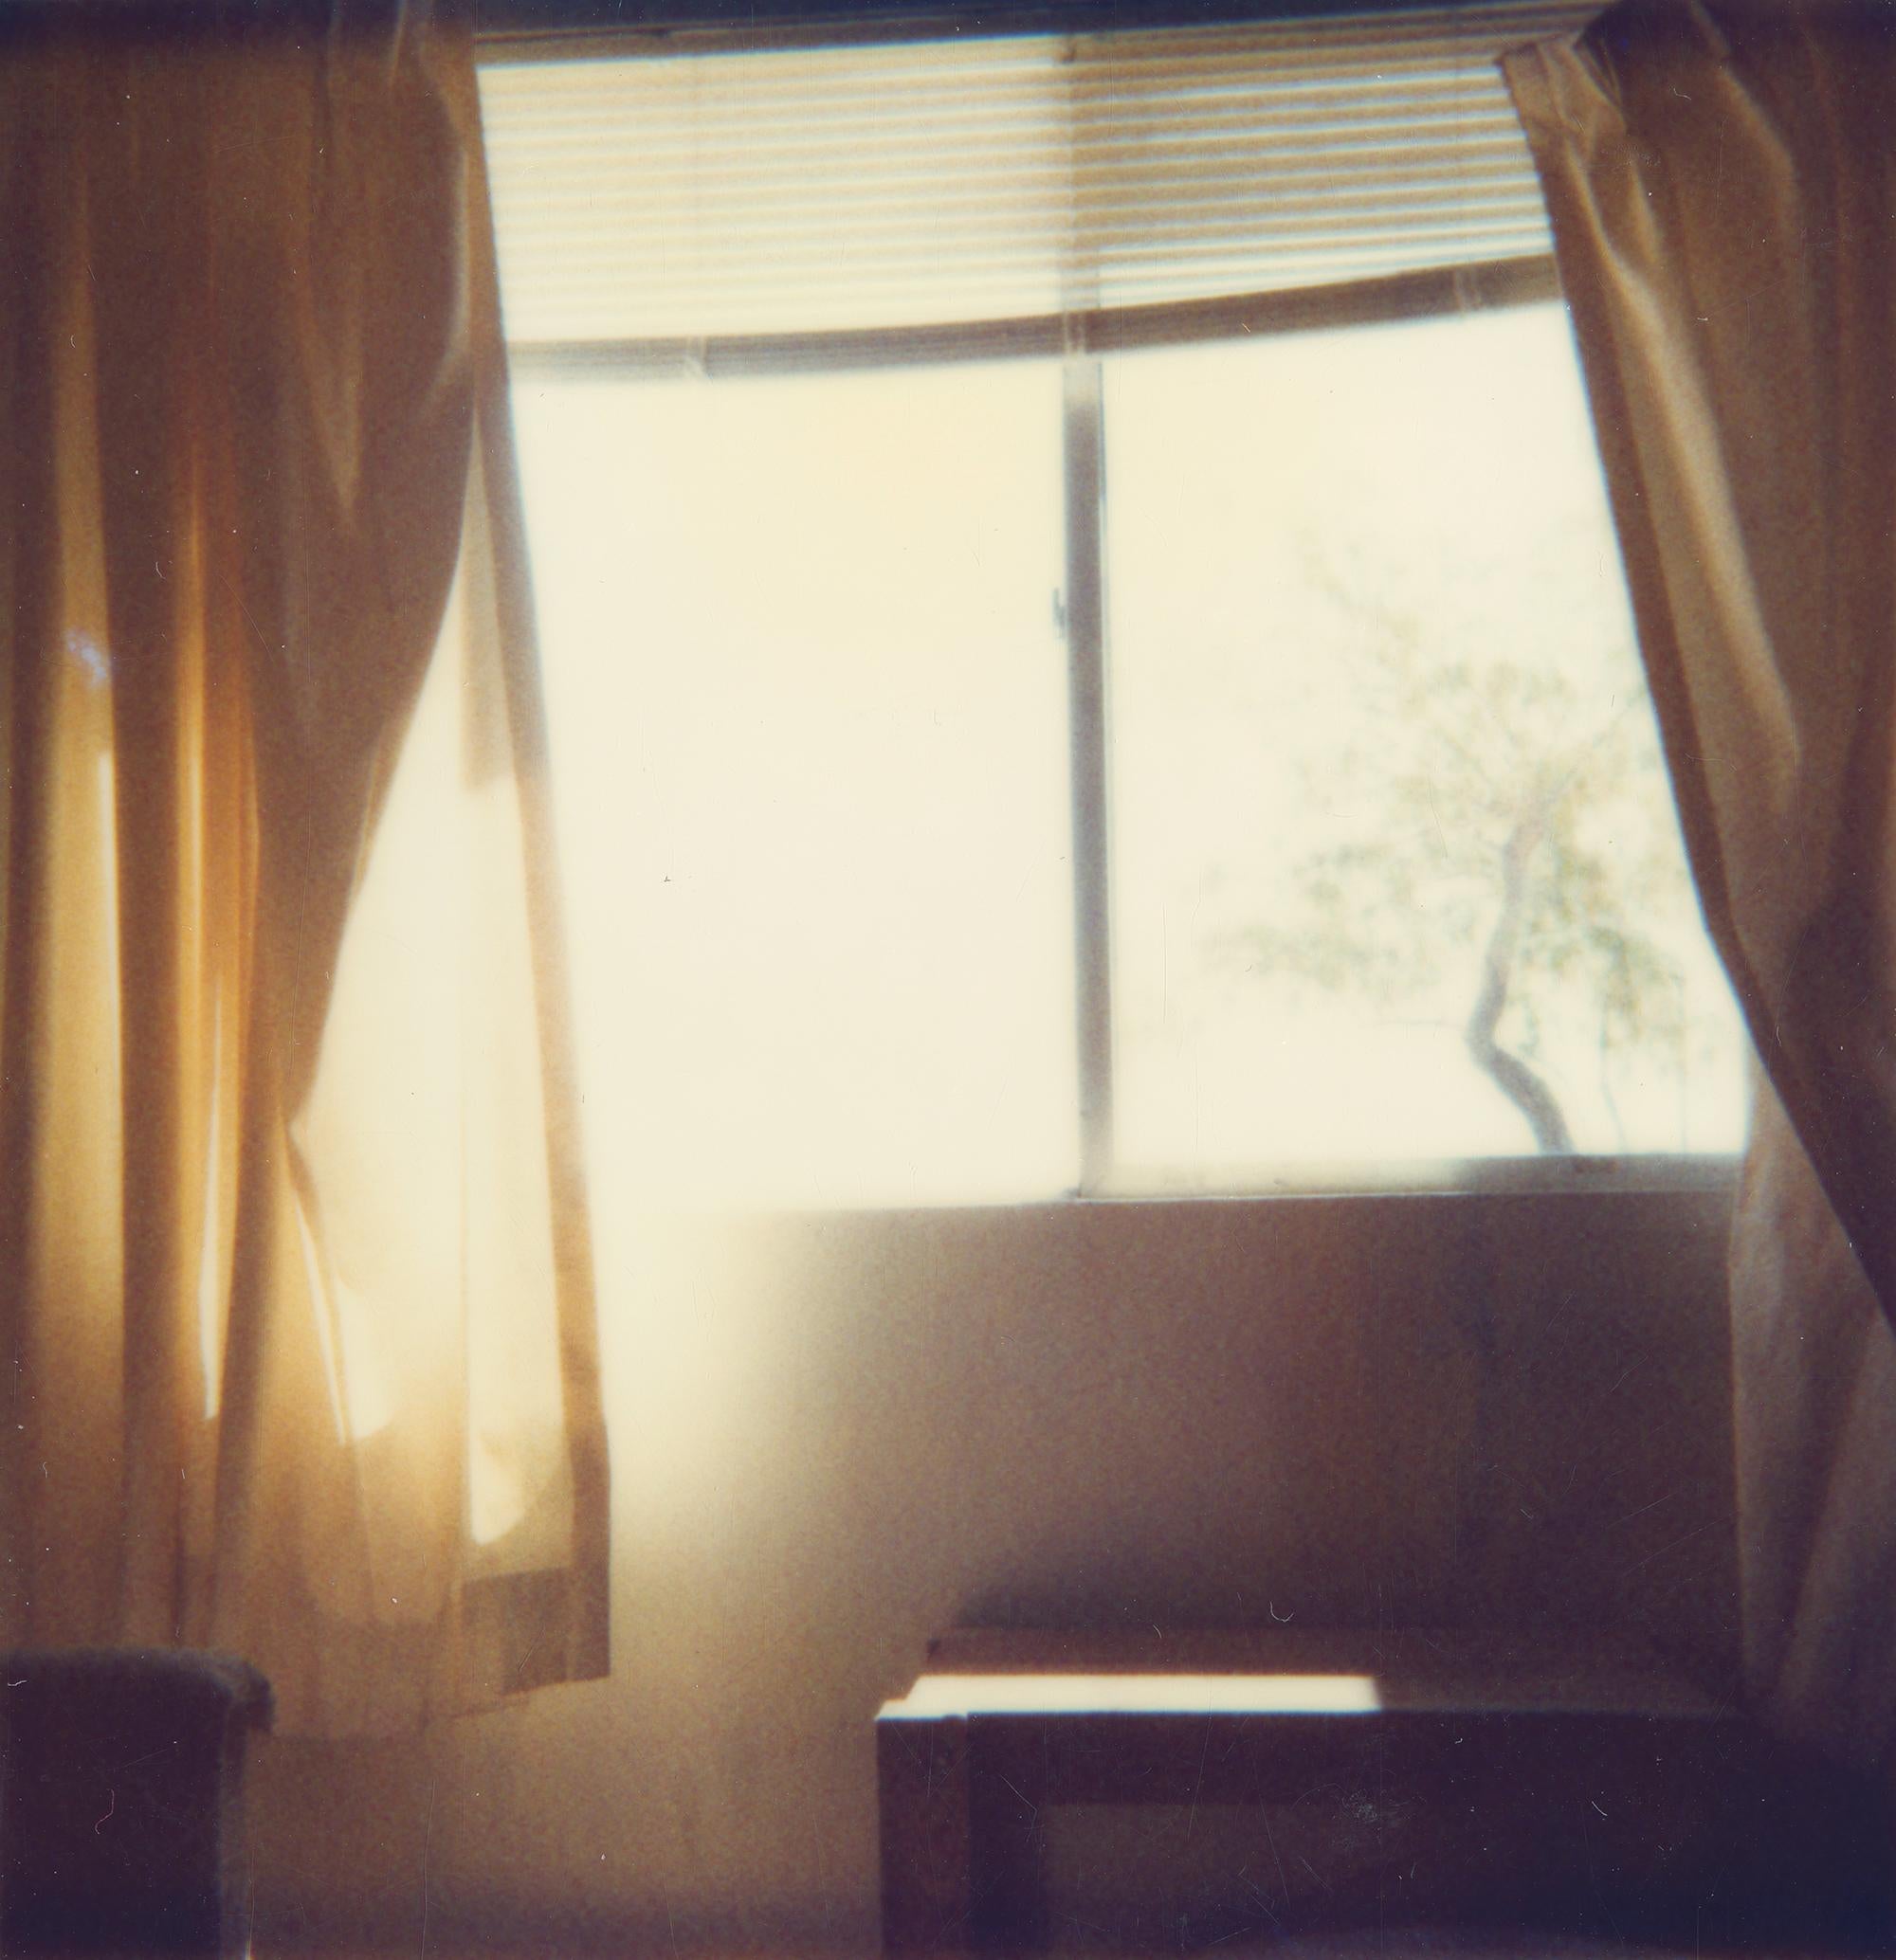 Portrait Photograph Stefanie Schneider - Room With A View (29 Palms, CA) - Polaroid, Contemporary